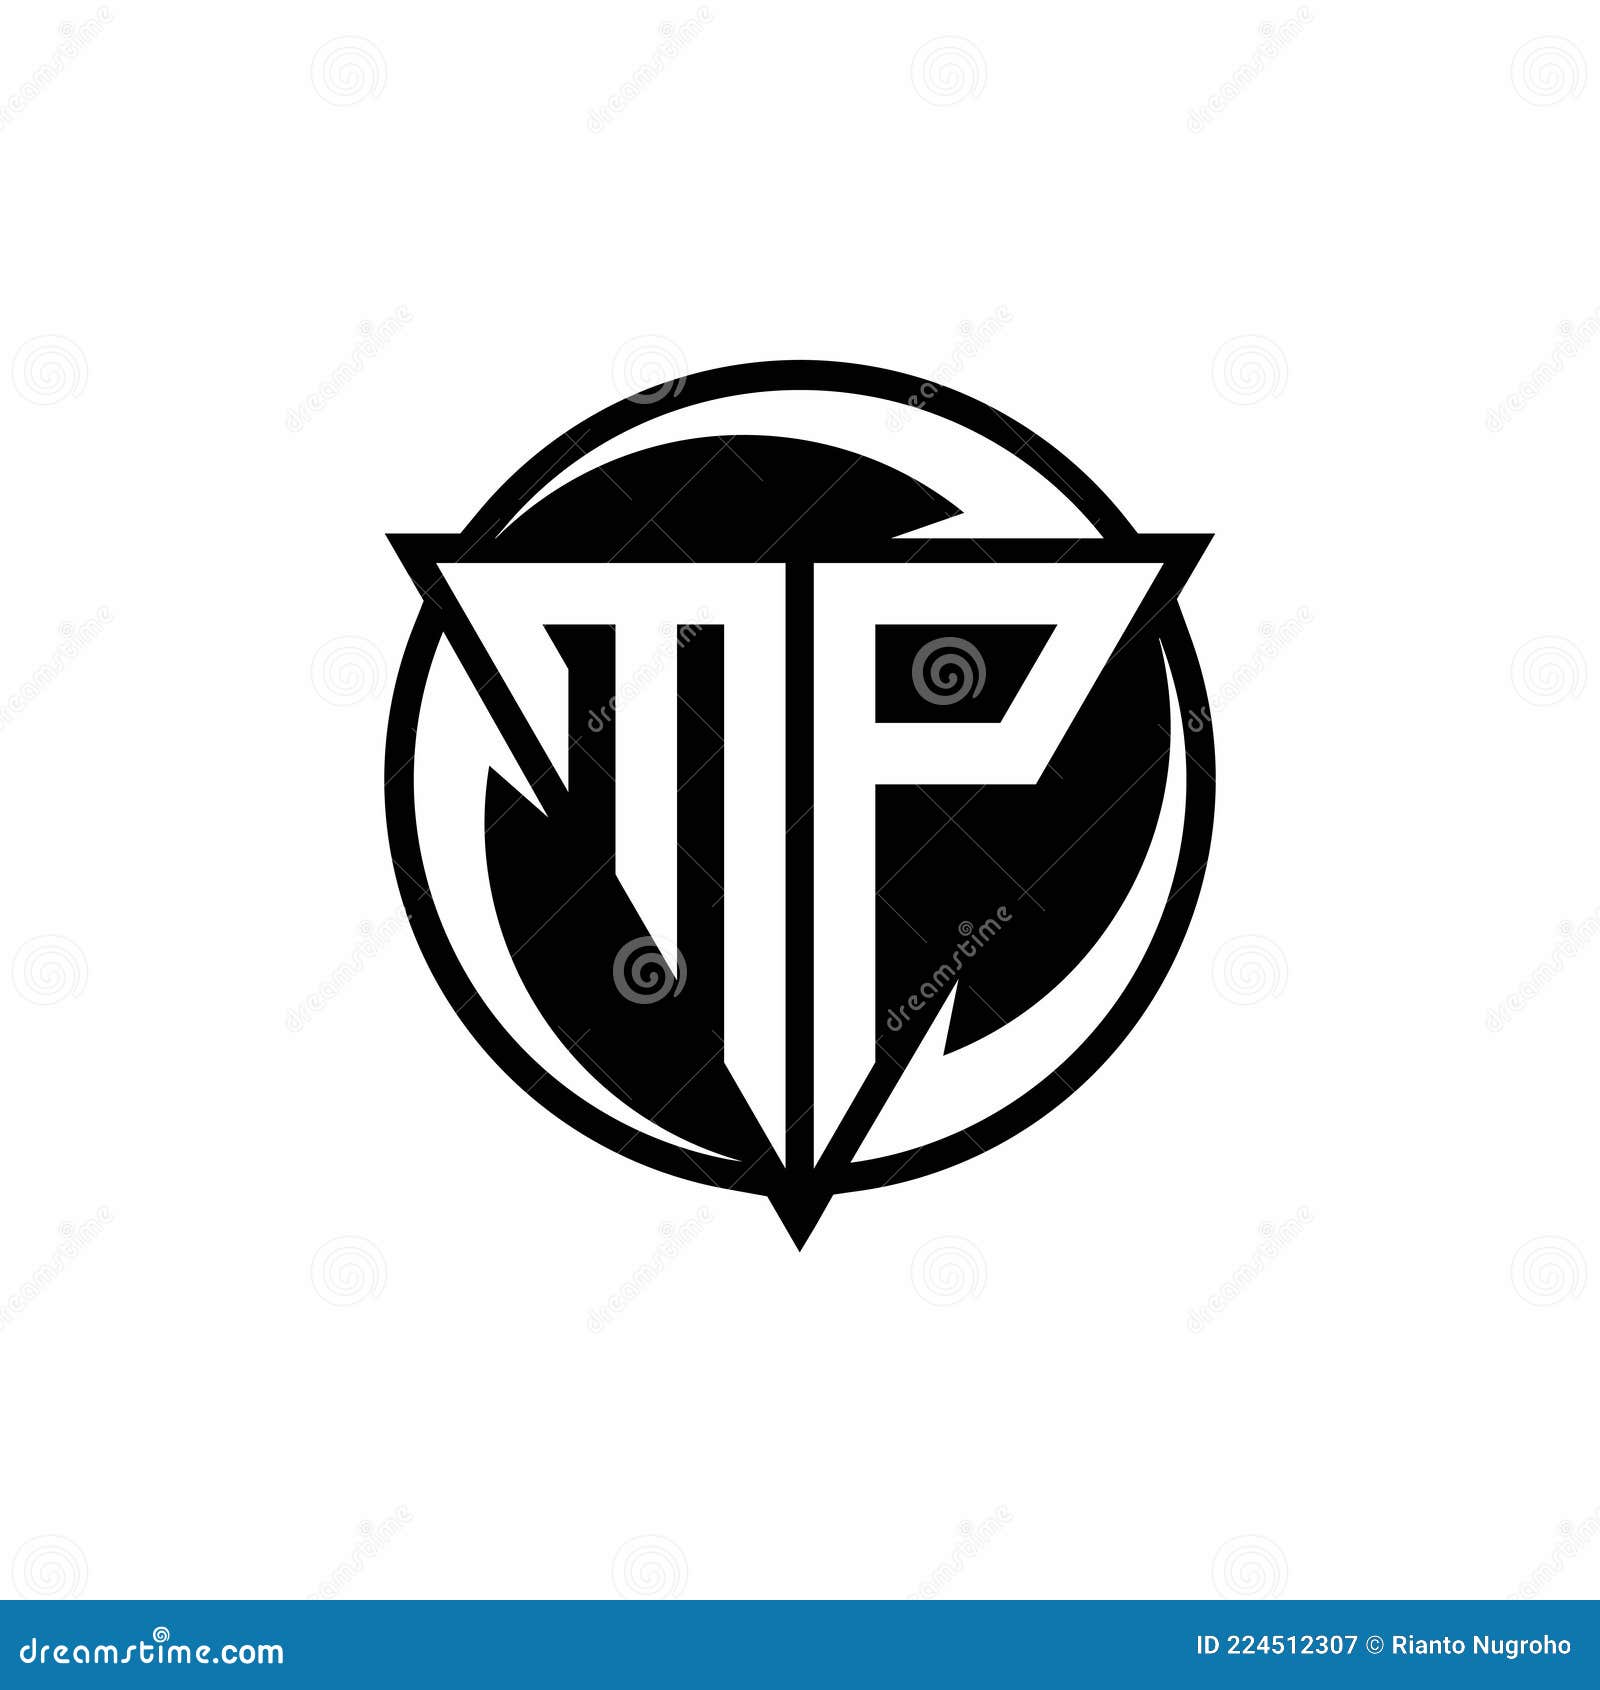 MP ( monogram )  Logo design set, Mp logo, Letter logo design